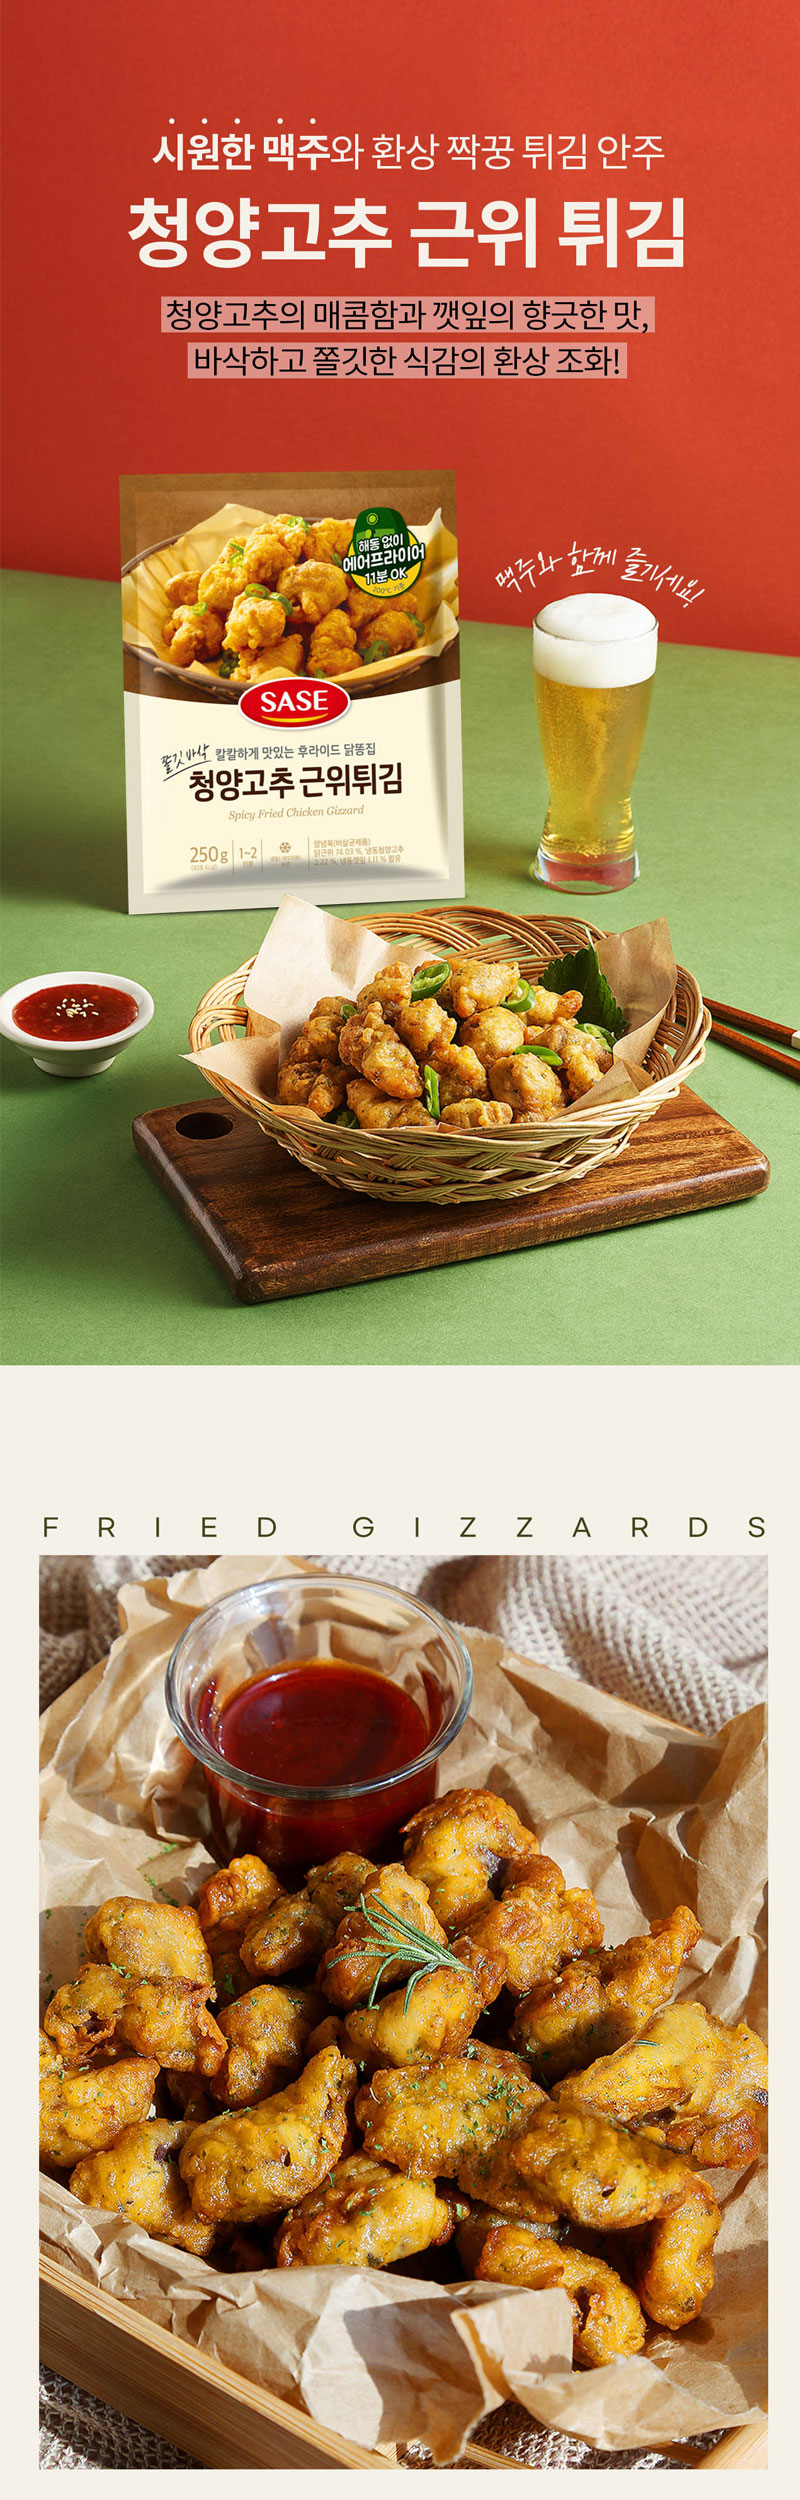 cheongyang-gochu-geunwi-fried-food-250g_detail_800_02.jpg